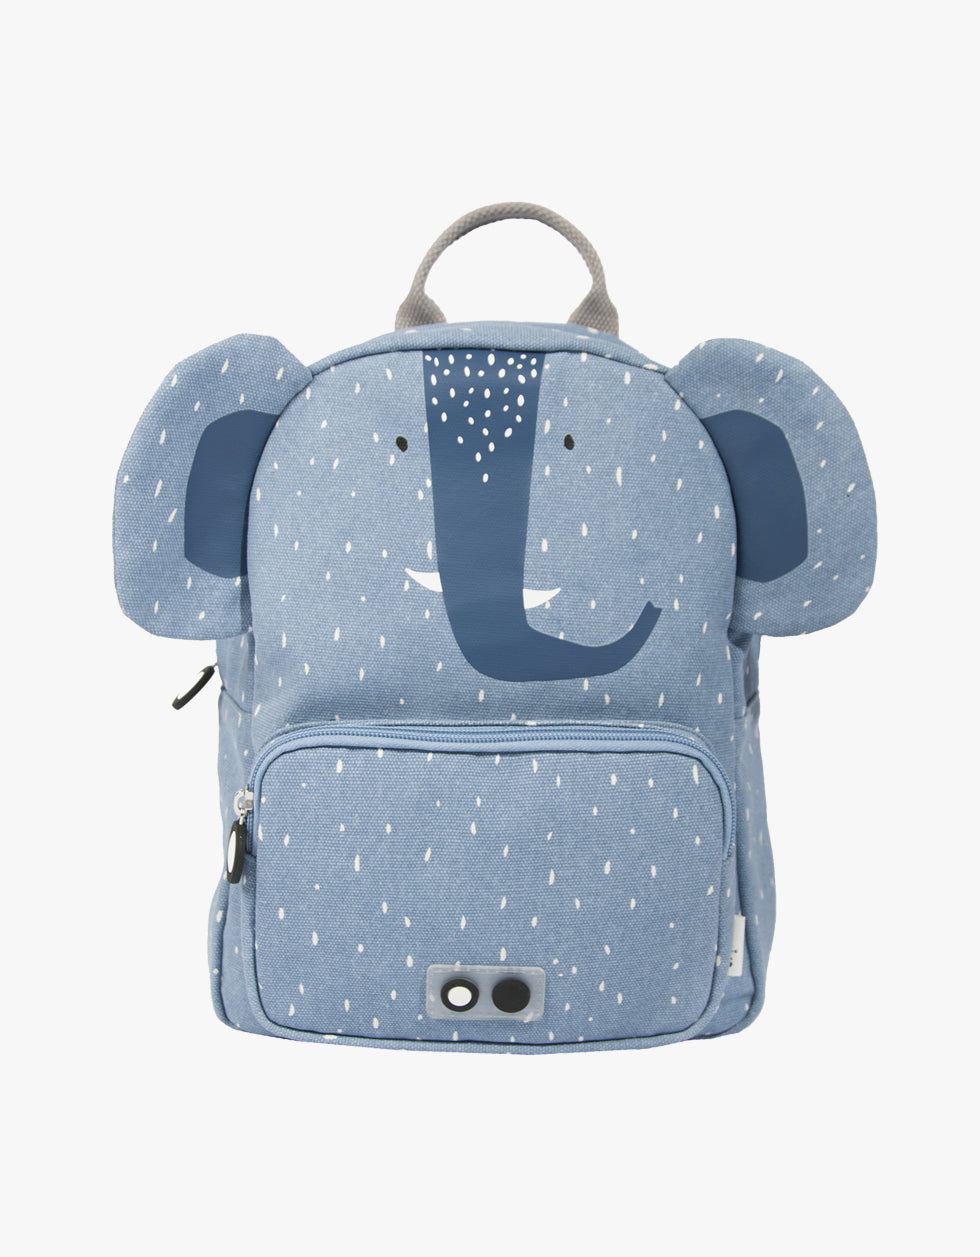 Mrs. Elephant Backpack